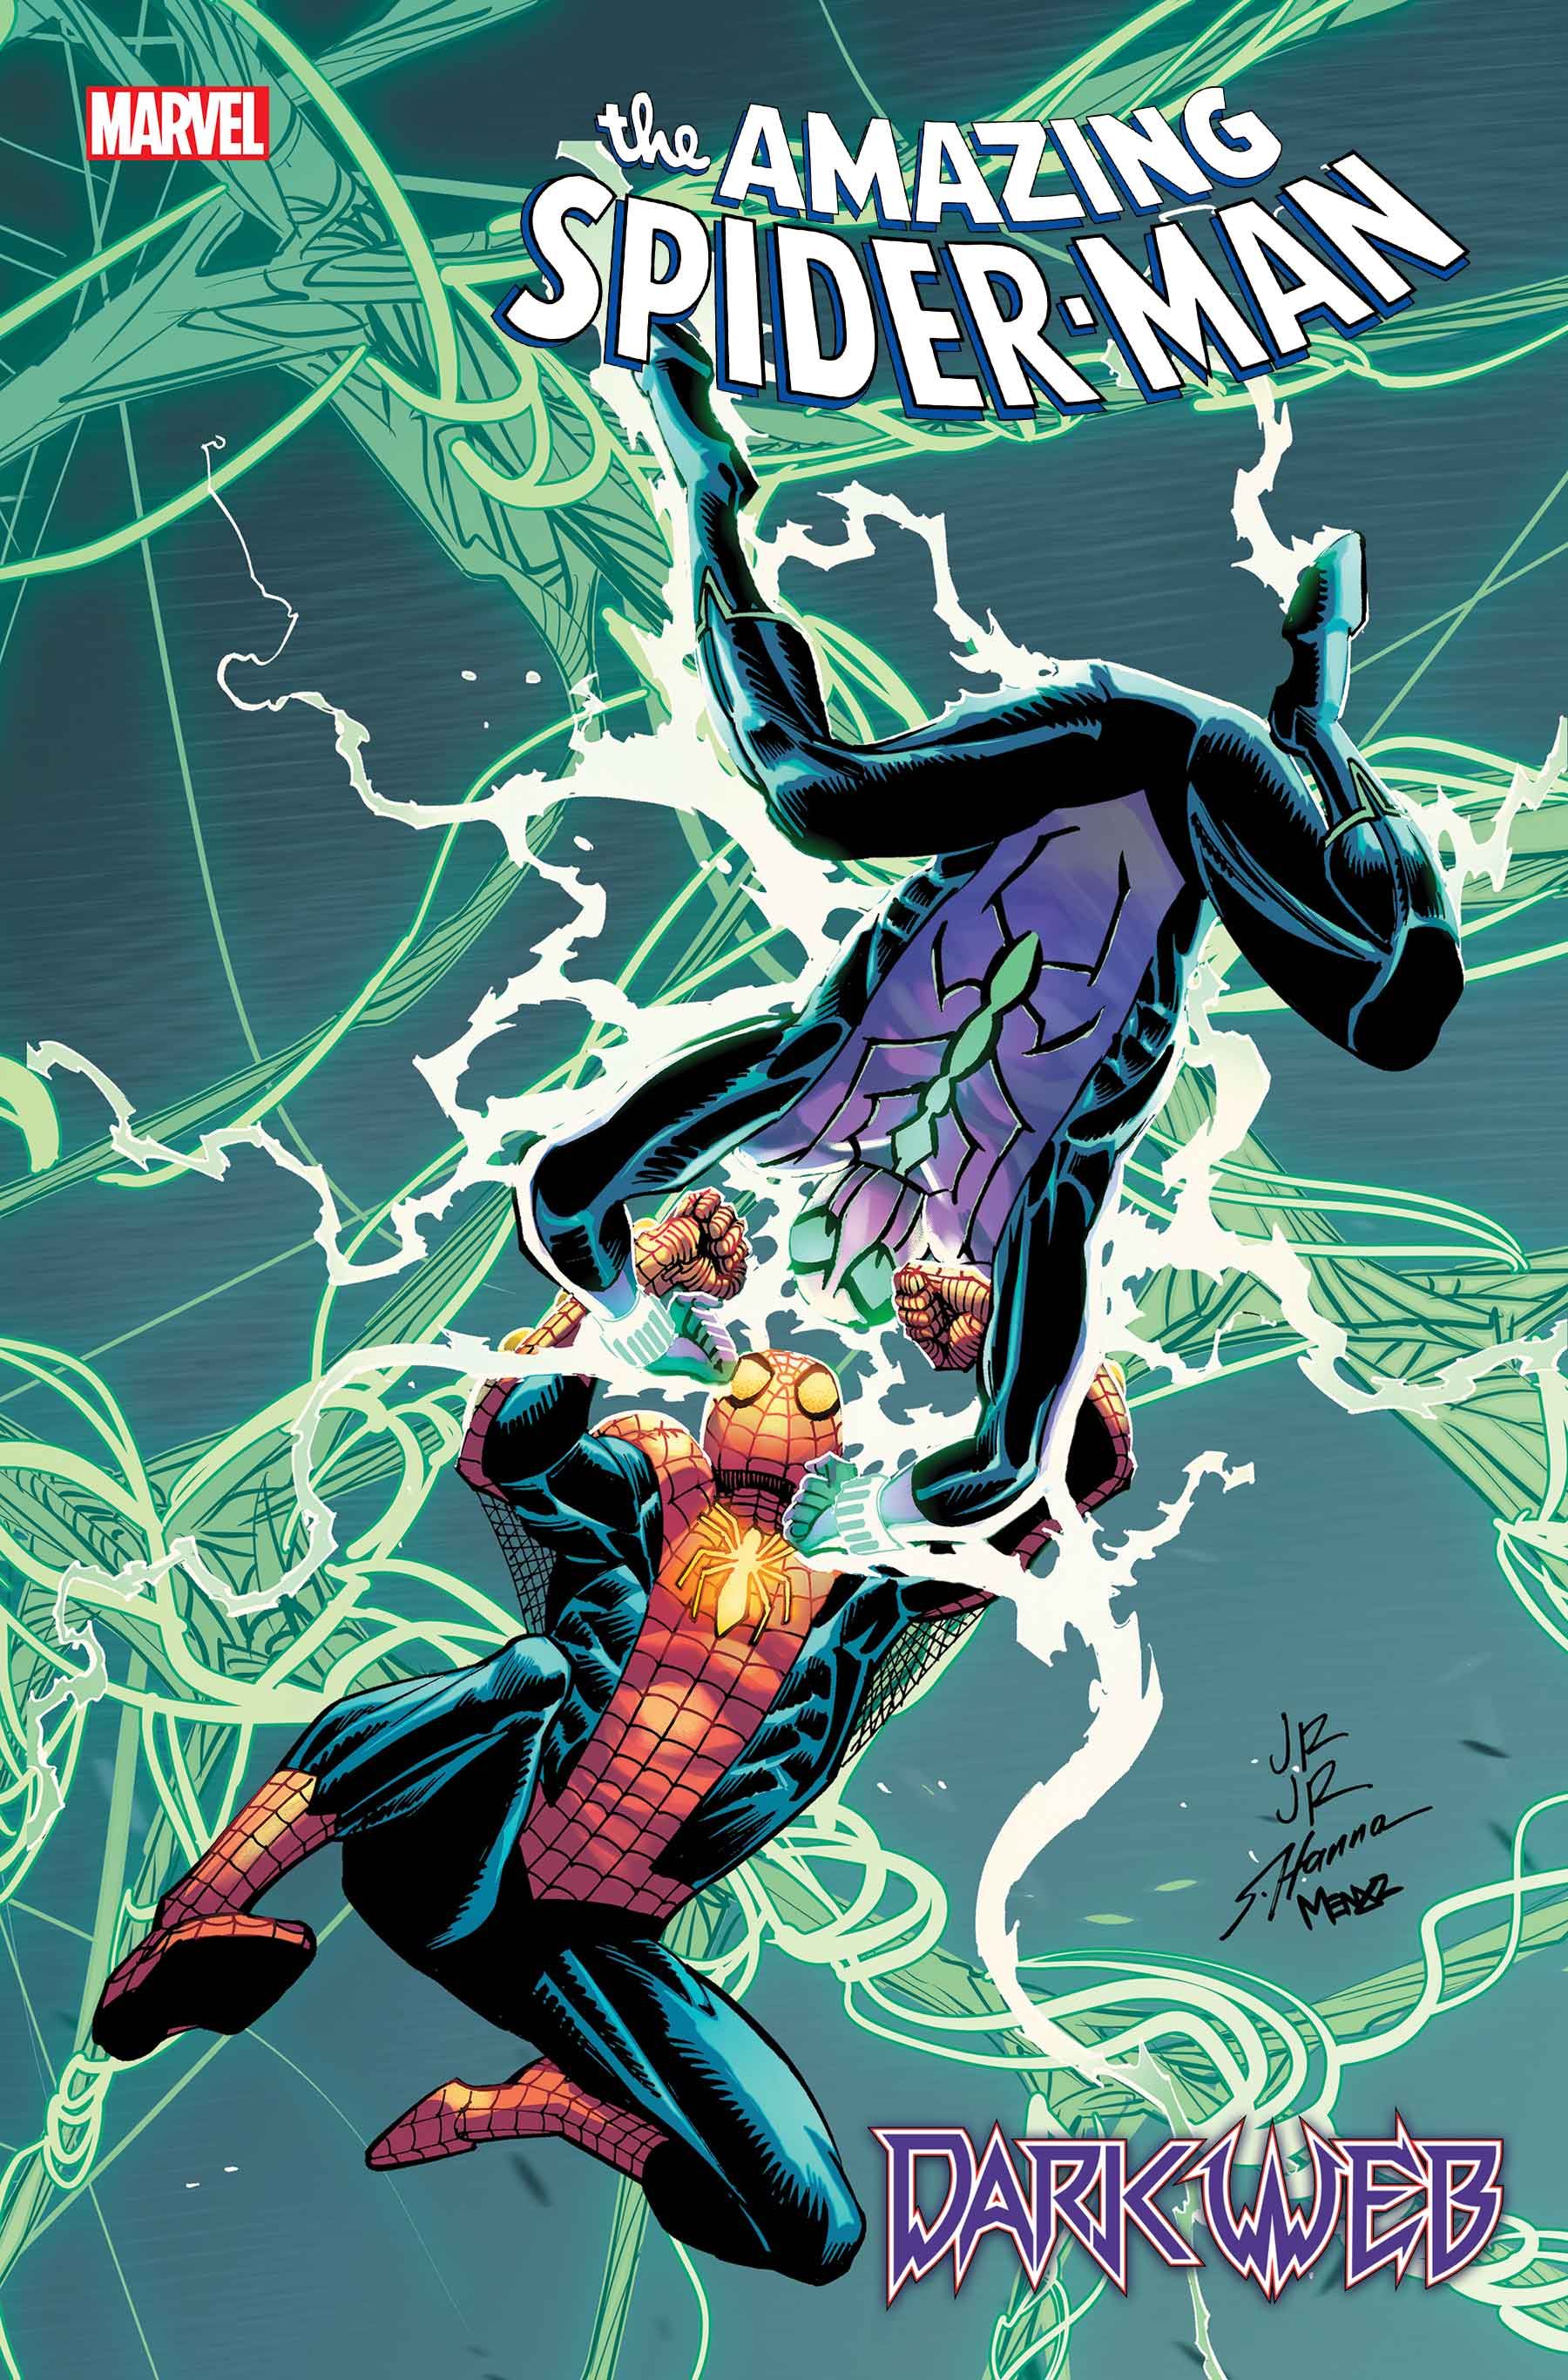 Peter Parker's Evil Clone Teams With Venom for Marvel's Spider-Man/X-Men Event